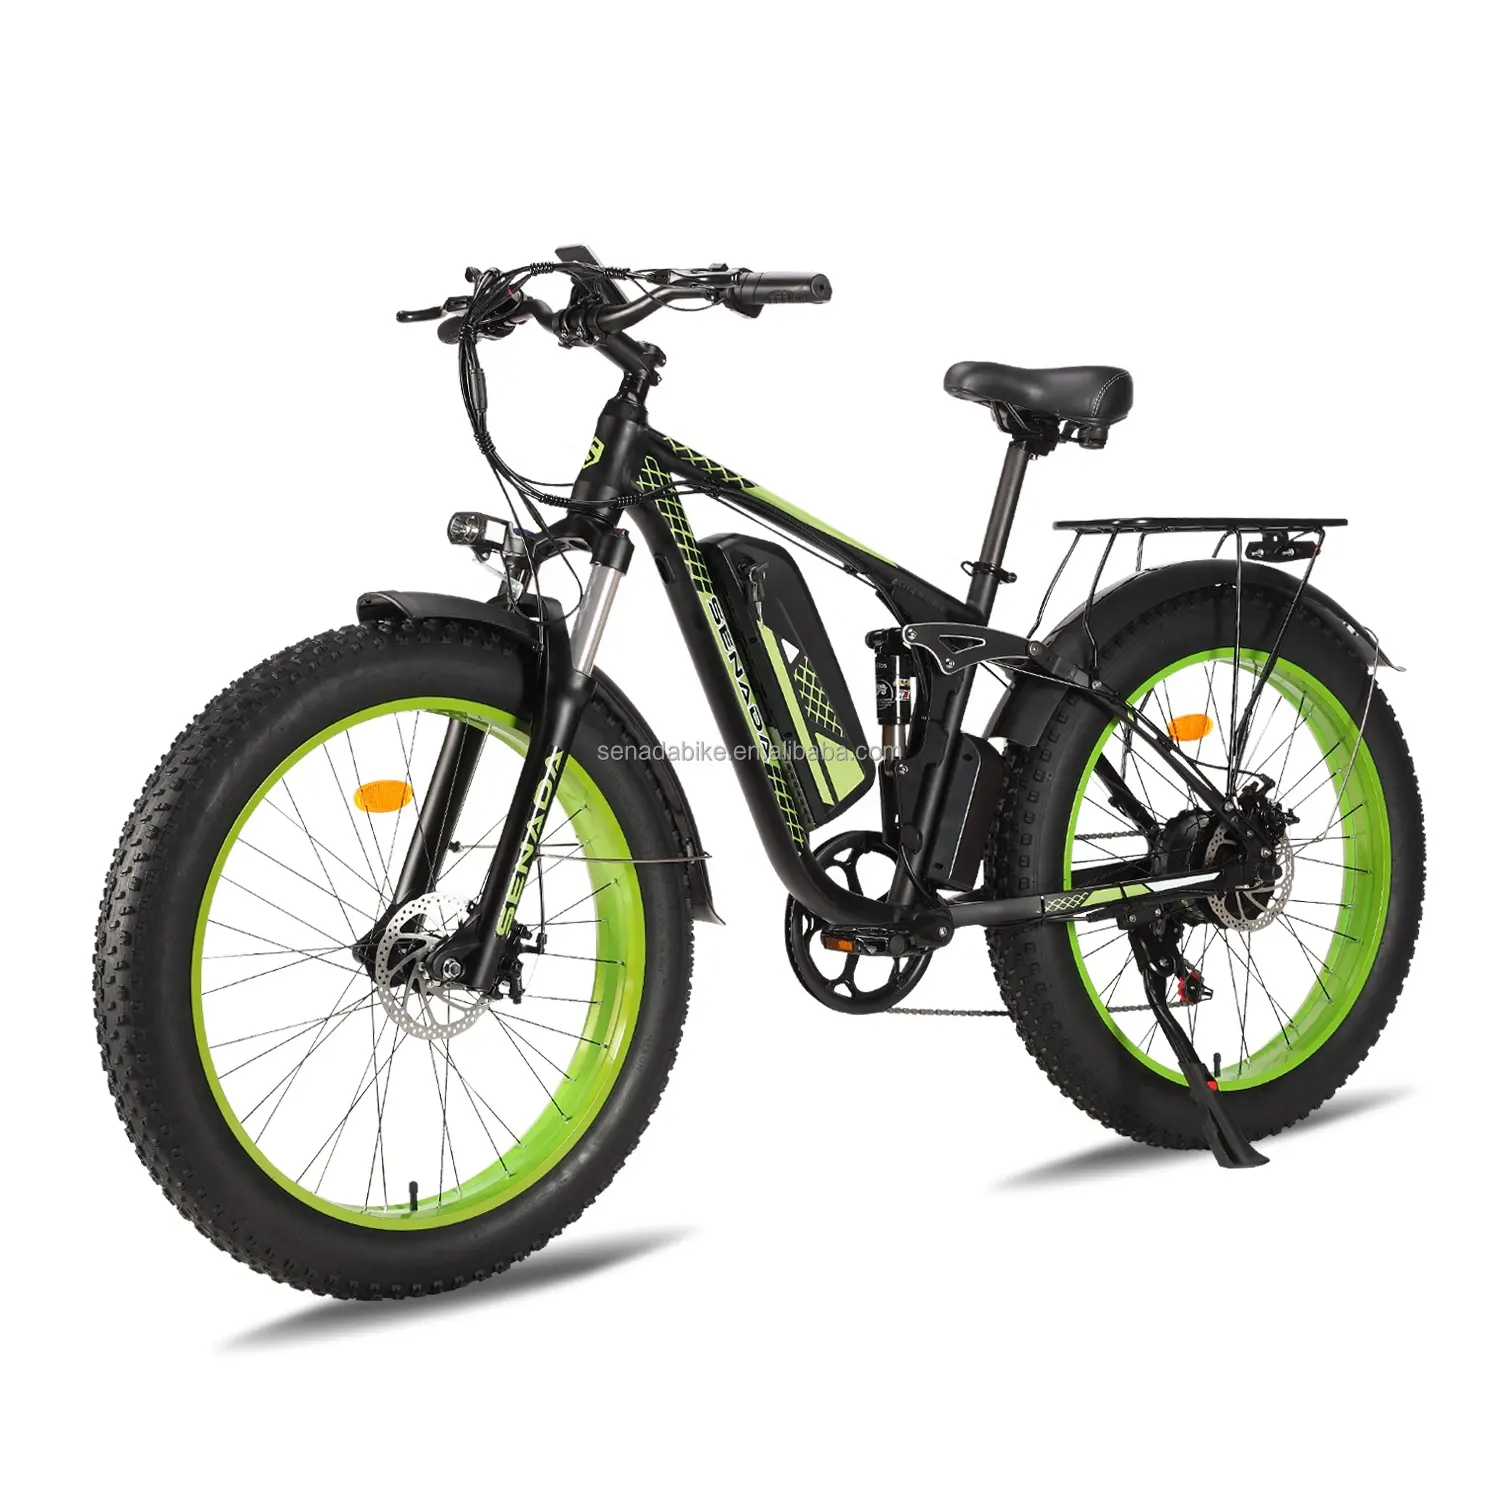 LO26-II Senada mountain titanium frames 500W folding electric bike mtb mountain bicycle